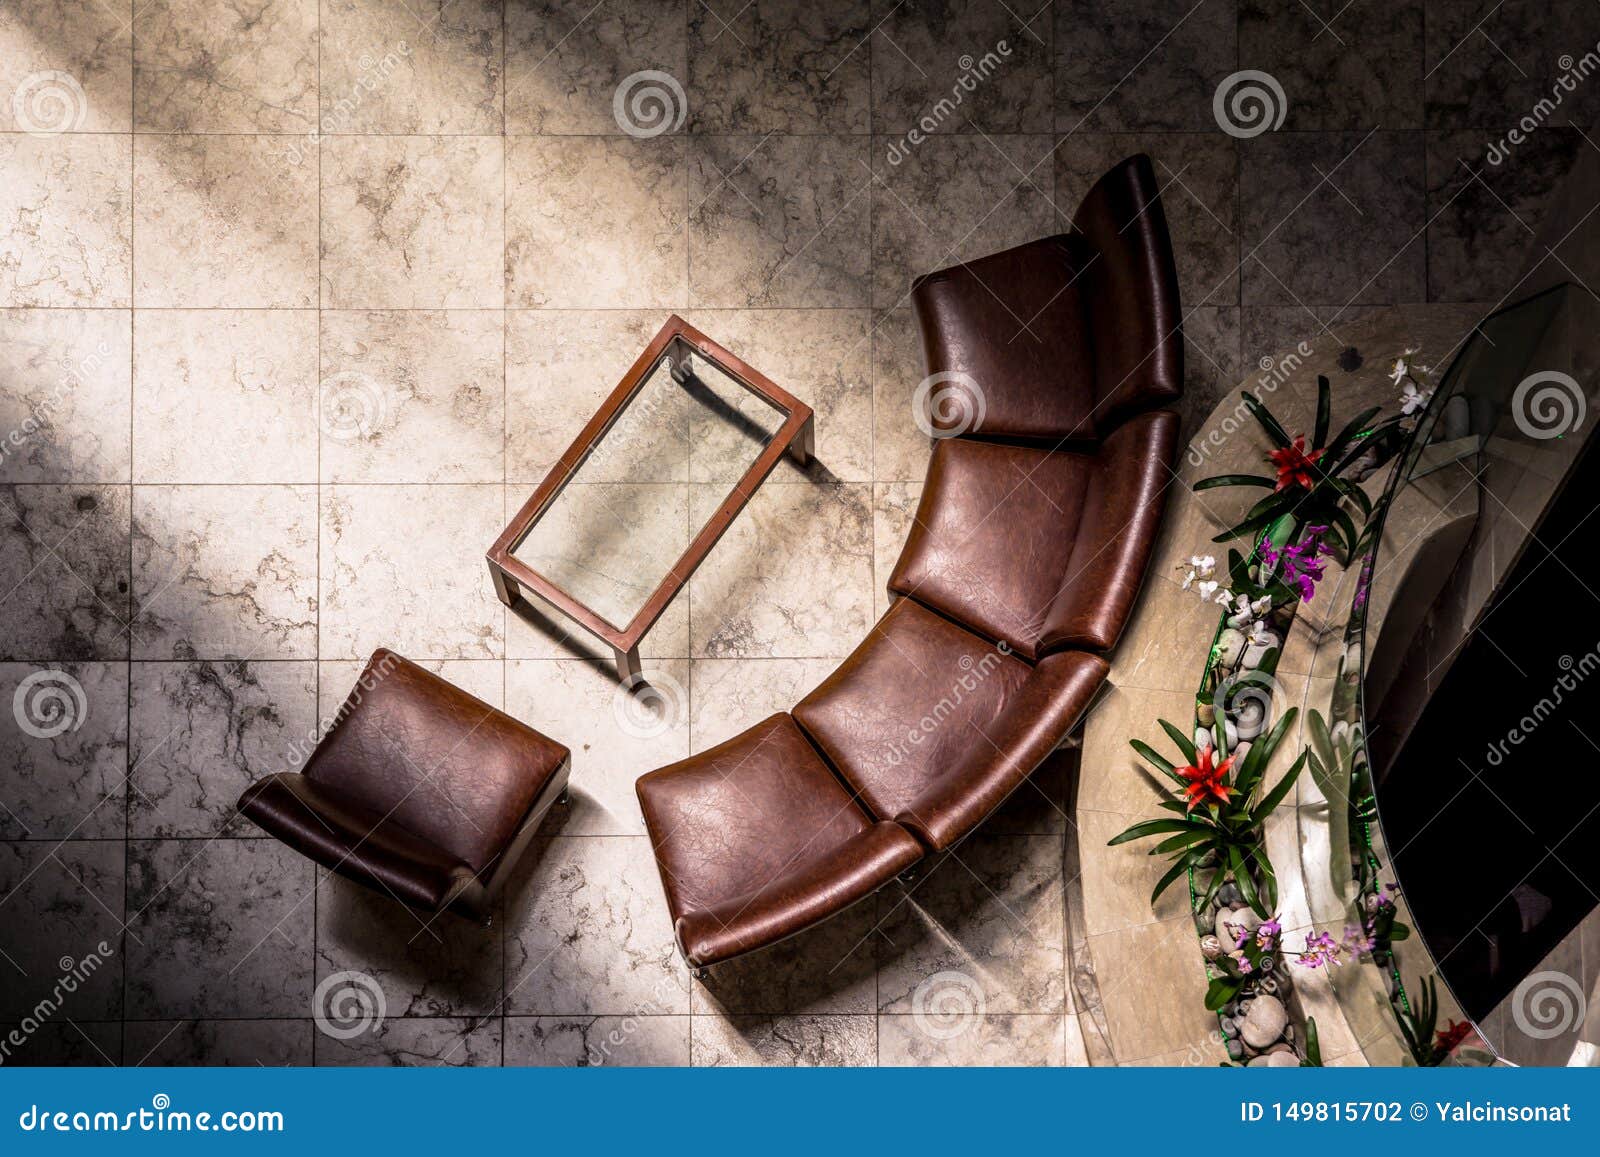 Hotel Lobby Design Stock Photo Image Of Chair Lobby 149815702